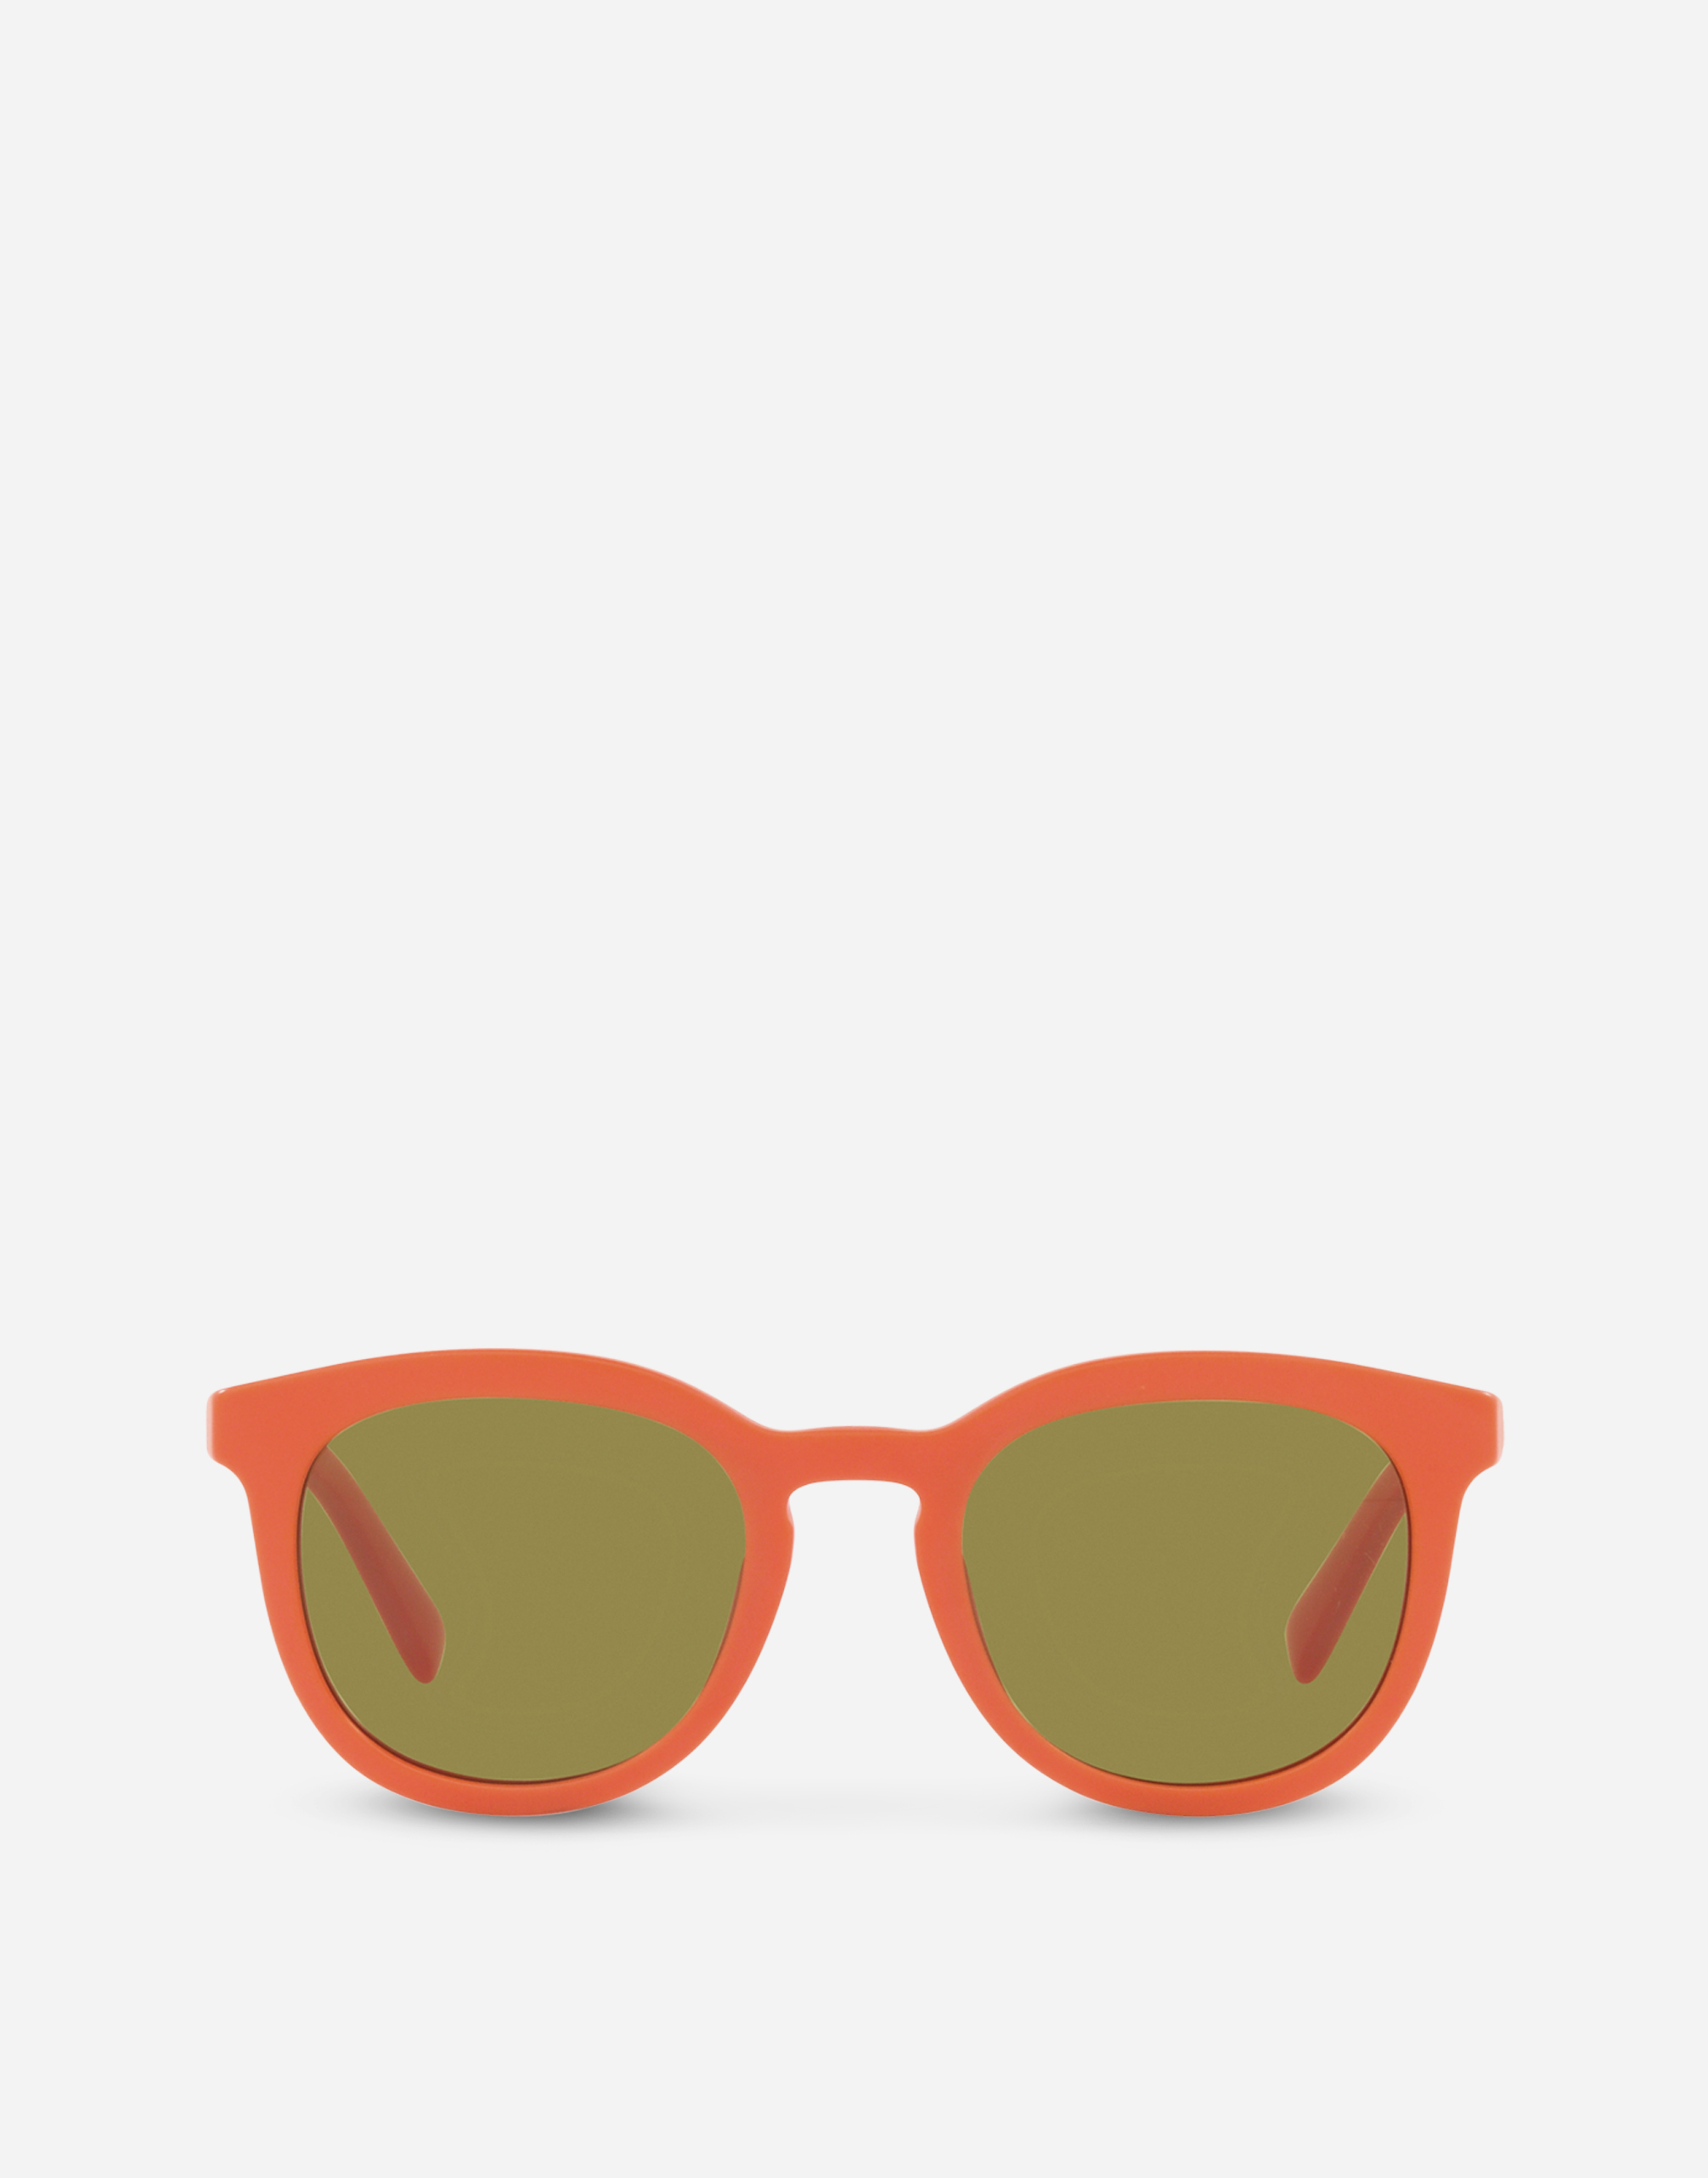 Inside nature Sunglasses in Orange matte